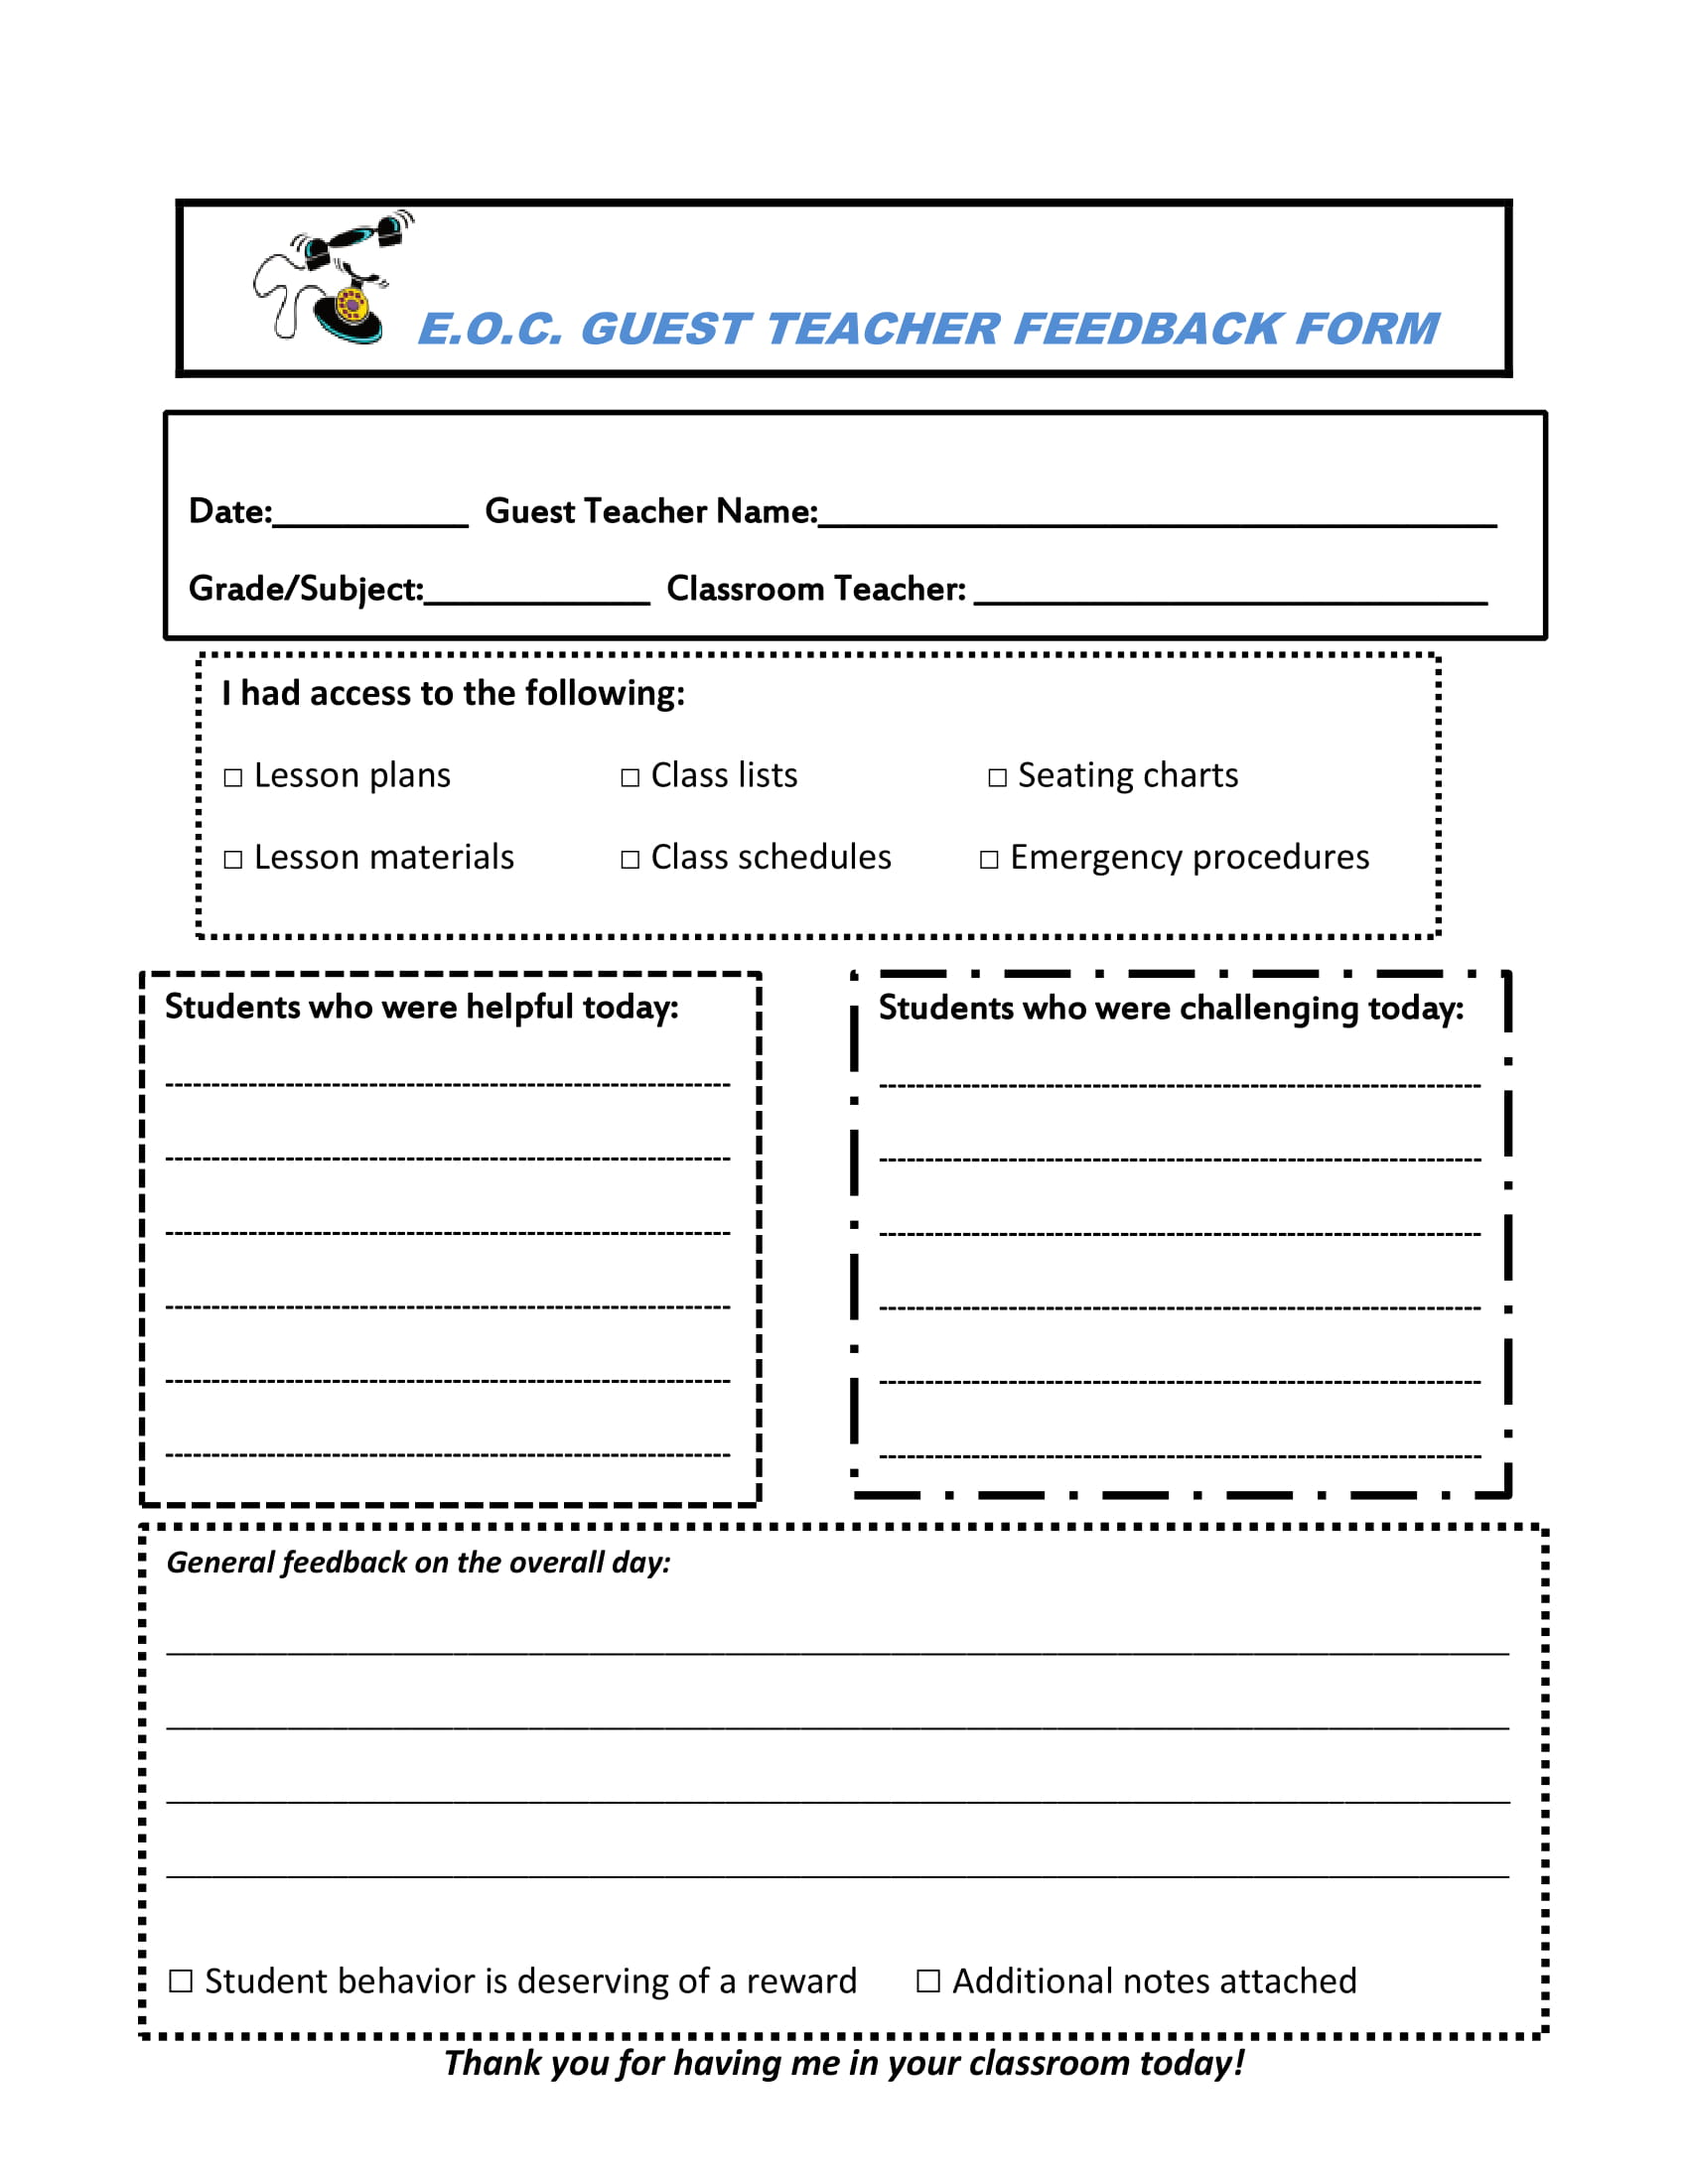 guest teacher feedback form 1